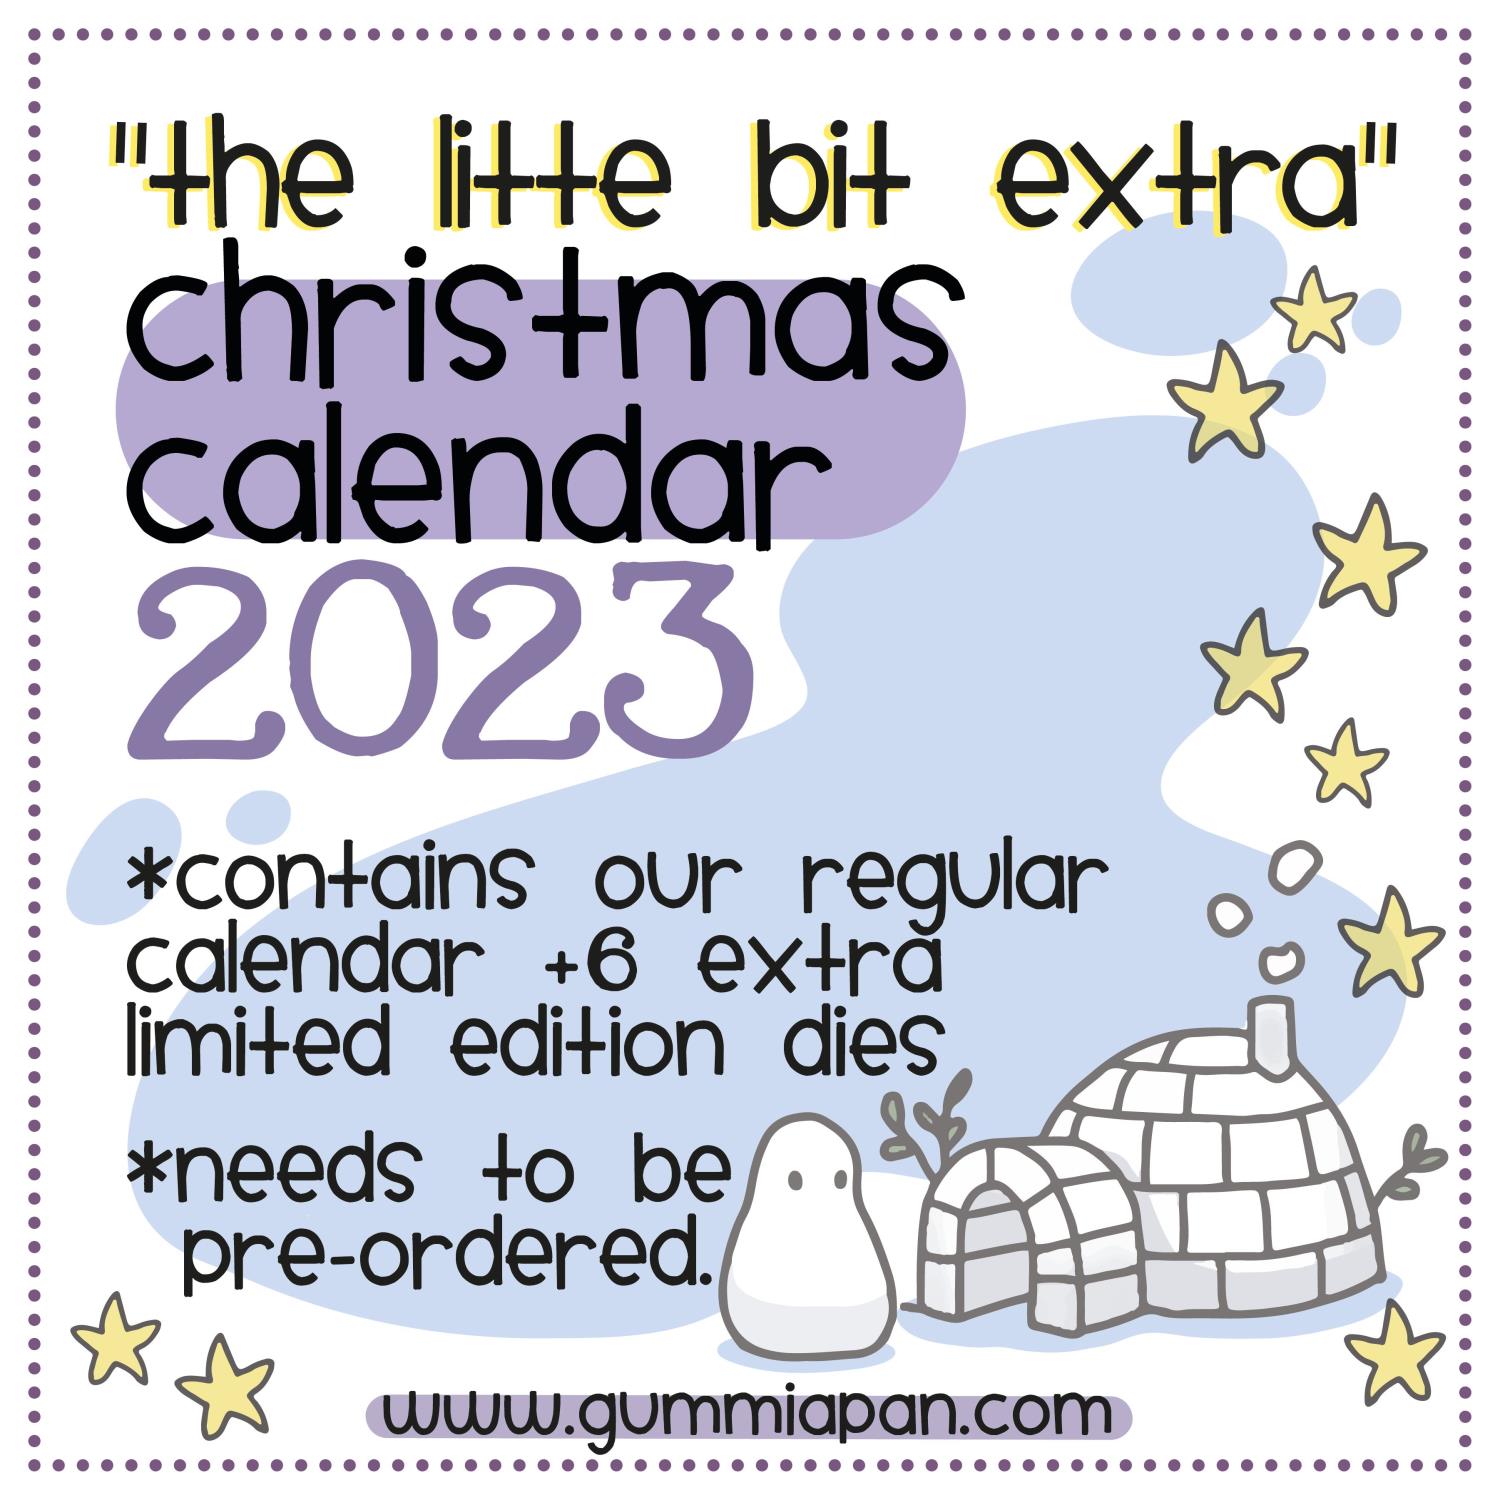 Gummiapan - Adventkalender - Dies - "The little bit extra" Christmas Calendar 2023